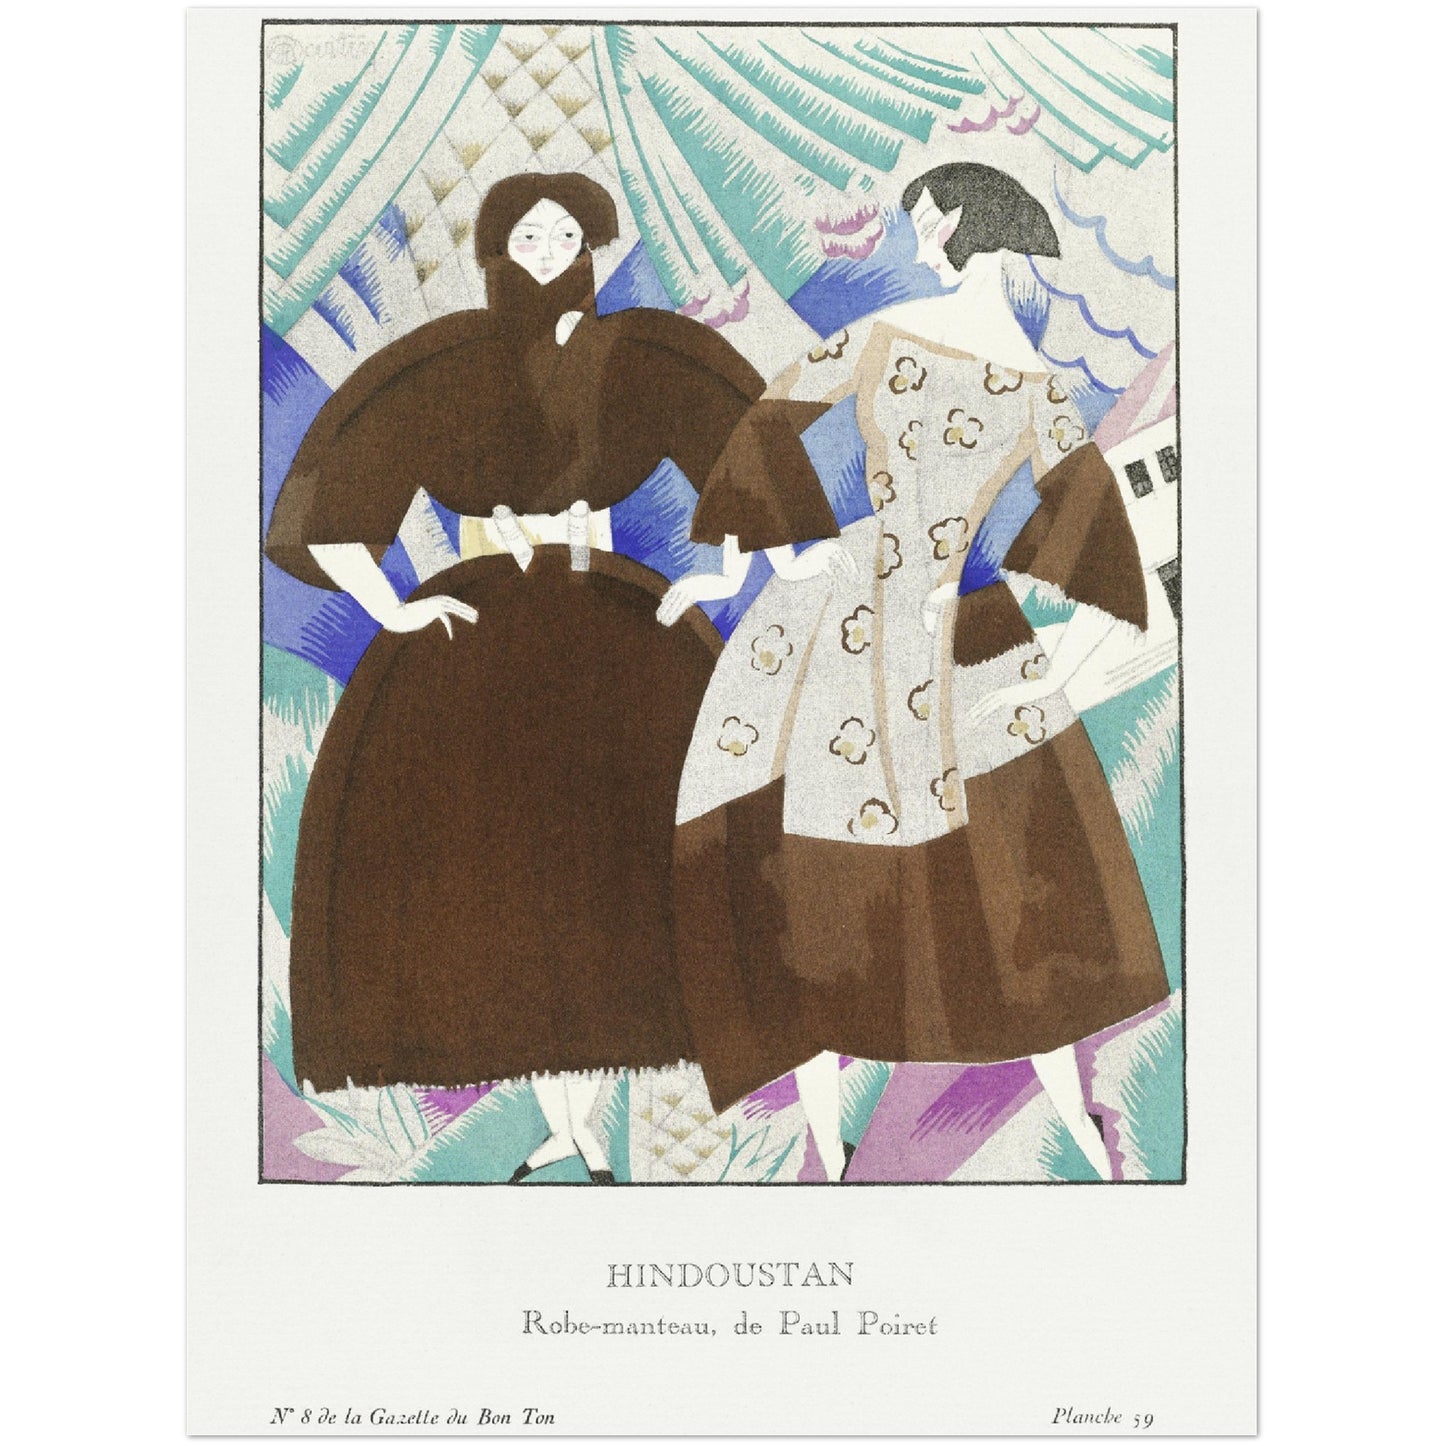 Plakat - Hindoustanobe-manteau, de Paul Poiret (1920) Charles Martin - Premium Mat Plakat